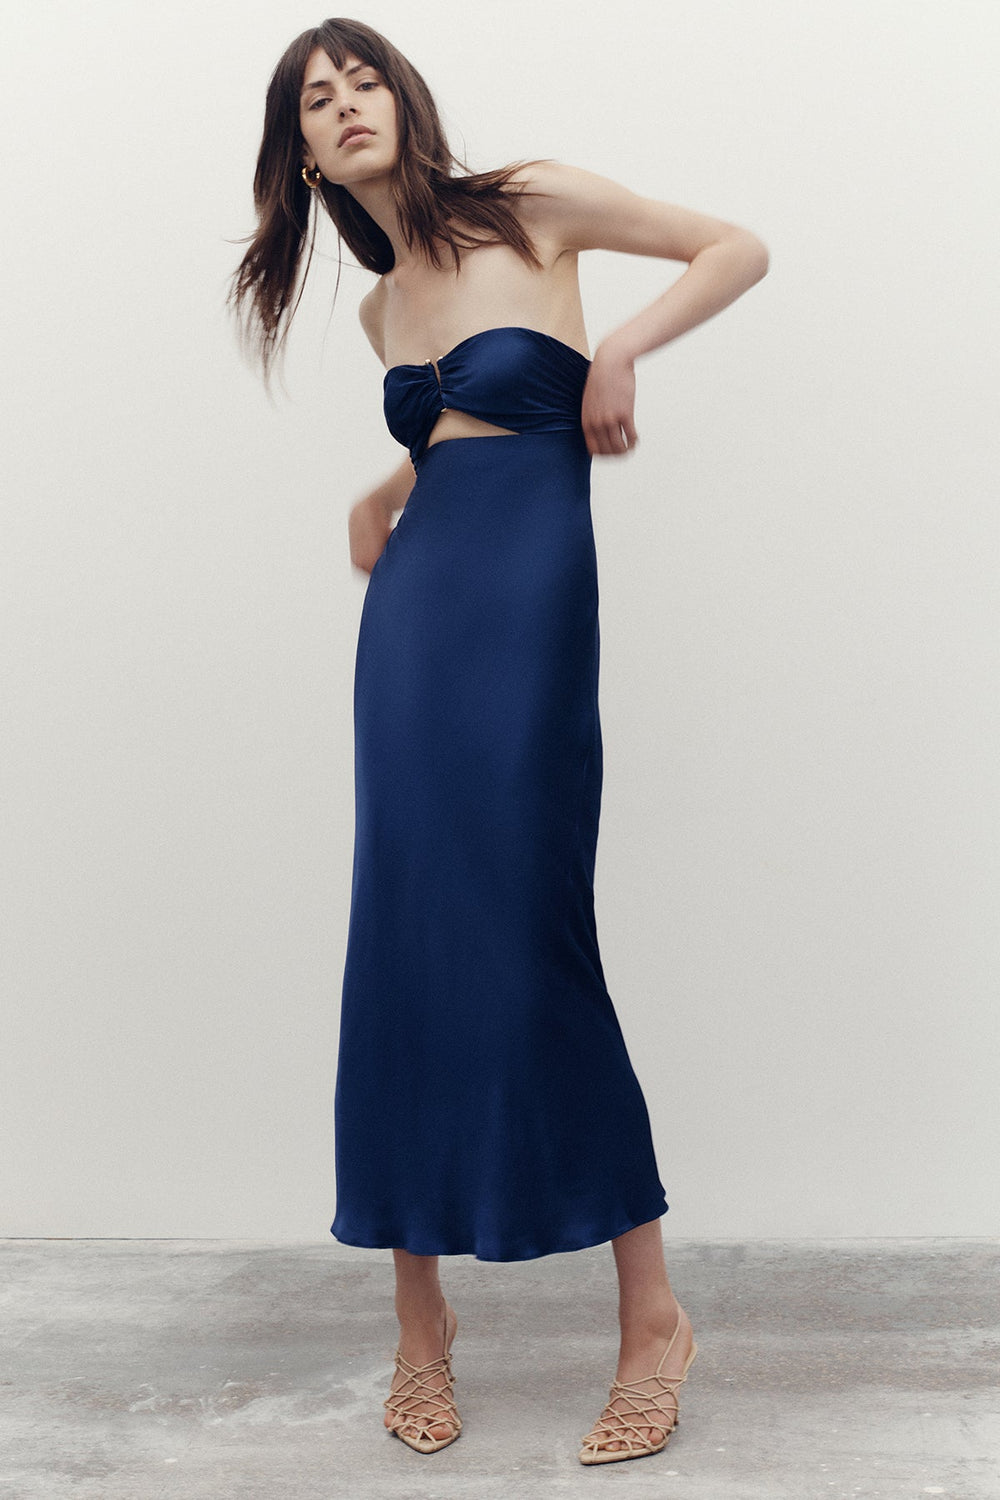 Almaeh Midi Dress - Twist Front Cut Out Strapless Slip Dress in Pale Blue